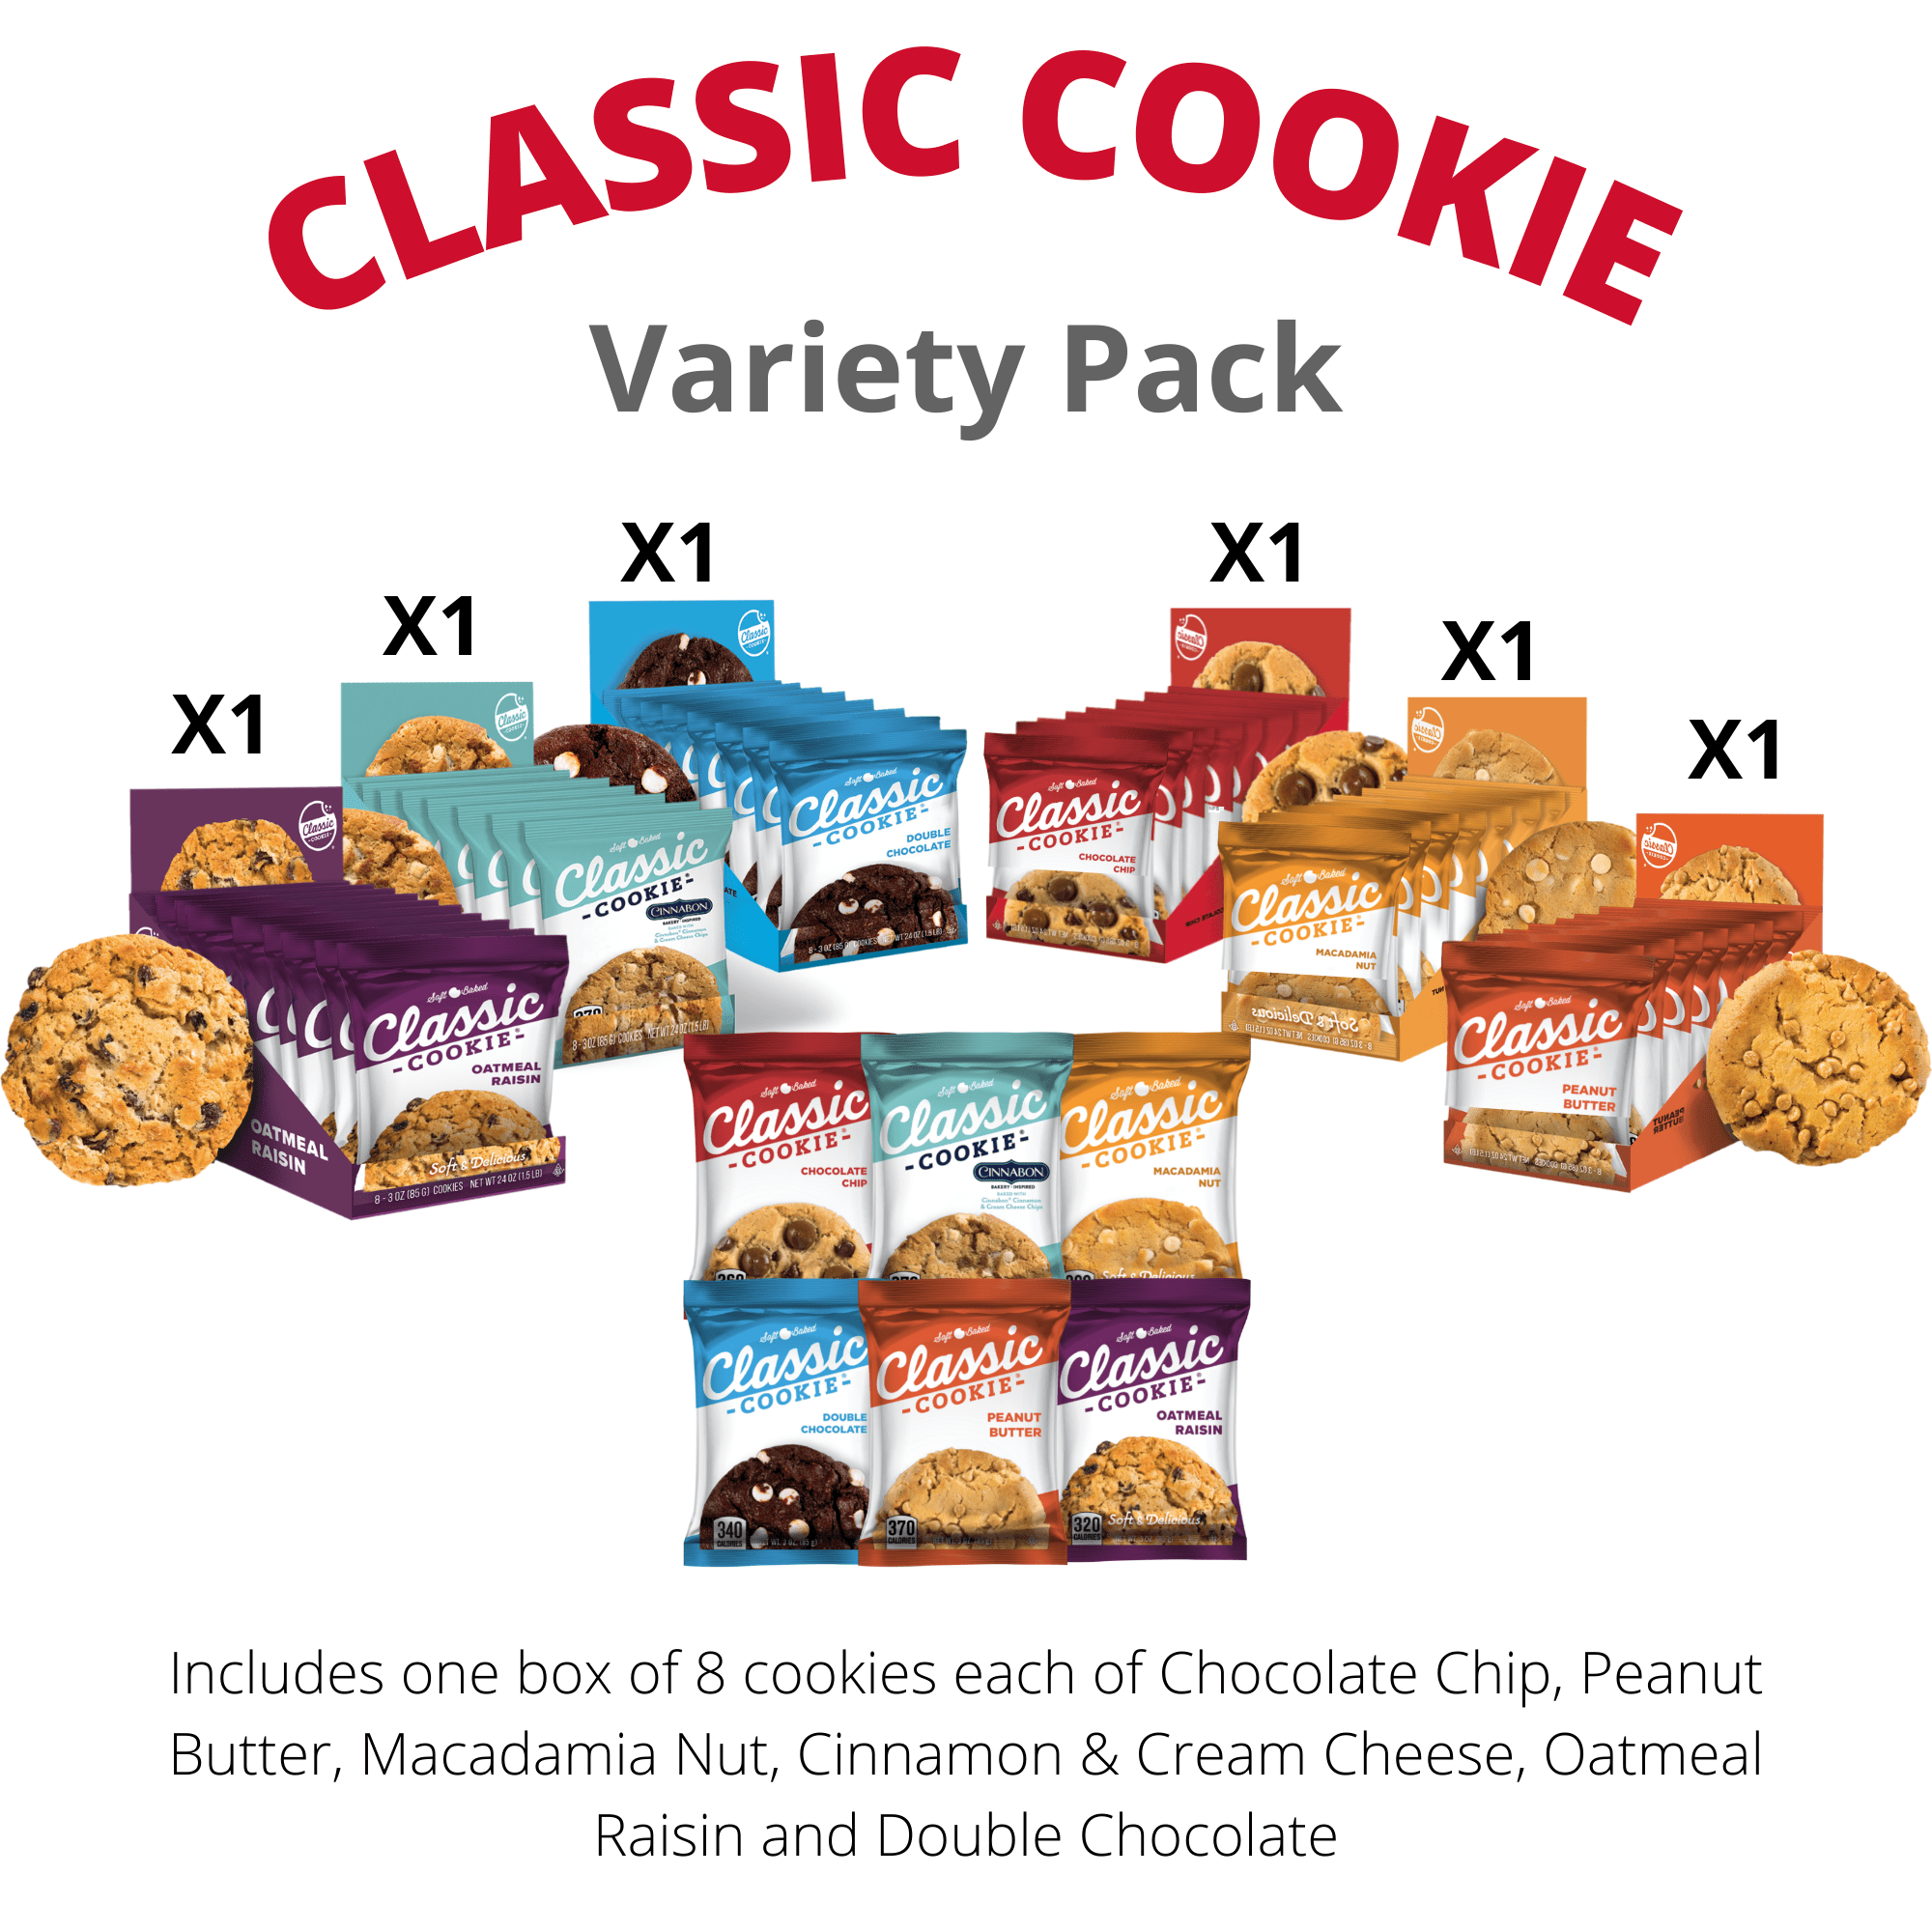 Classic Cookie (@classiccookie) • Instagram photos and videos